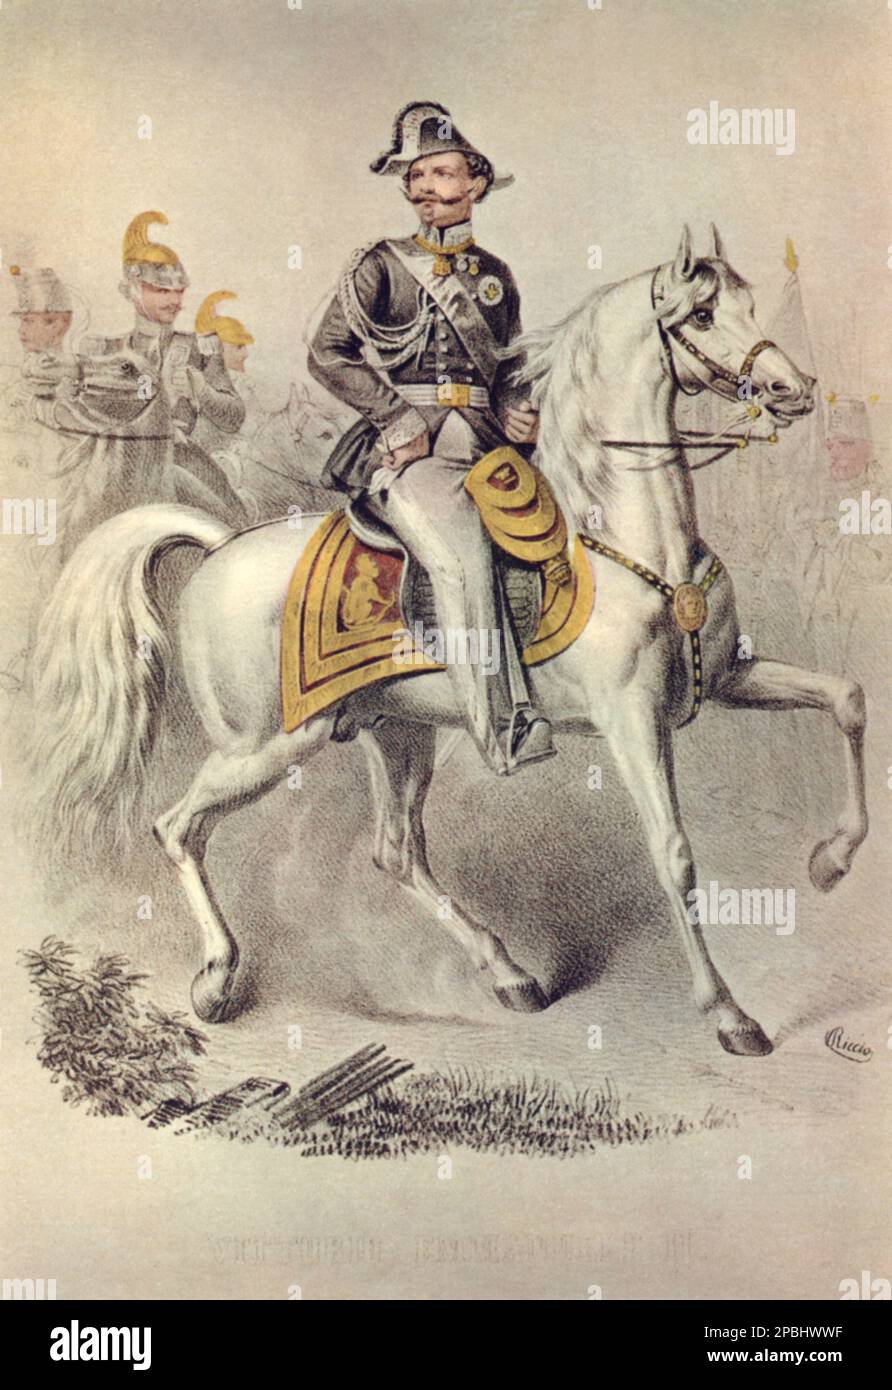 1860 Ca, Italien : der italienische König VITTORIO EMANUELE II di SAVOIA ( 1820 - 1888 ) während des Krieges von 1859, Popular Print von Riccio - Italien - ITALIA - CASA SAVOIA - REALI - Nobiltà ITALIANA - SAVOY - ADEL - KÖNIGE - GESCHICHTE - FOTOSTORICHE - Könige - nobili - Nobiltà - Portrait - Rituto - Baffi - Schnurrbart - Militäruniform - Divisa uniforme militare - ITALIA - Incisione - Gravur - Pferd - cavallo - Equitazione --- Archivio GBB Stockfoto